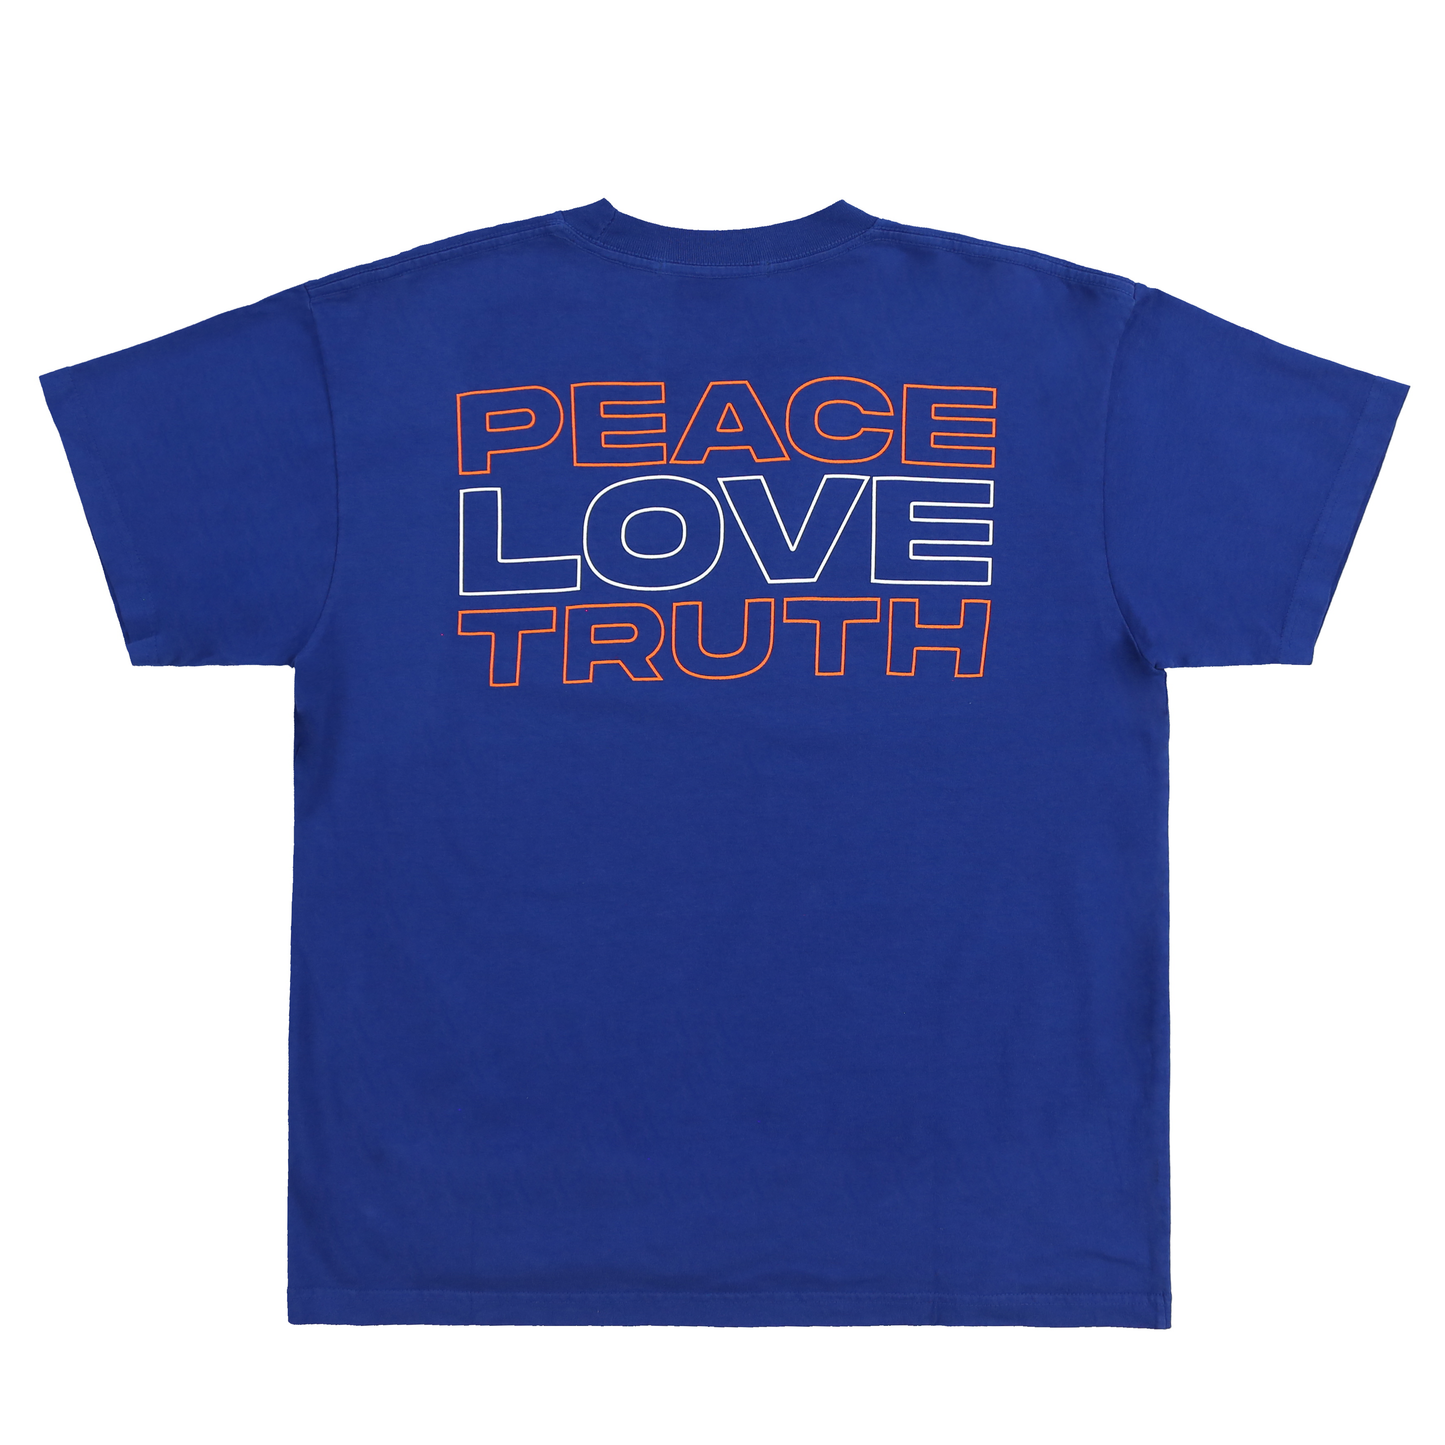 CA$INO Peace Love Truth Tee (Blue/Orange)